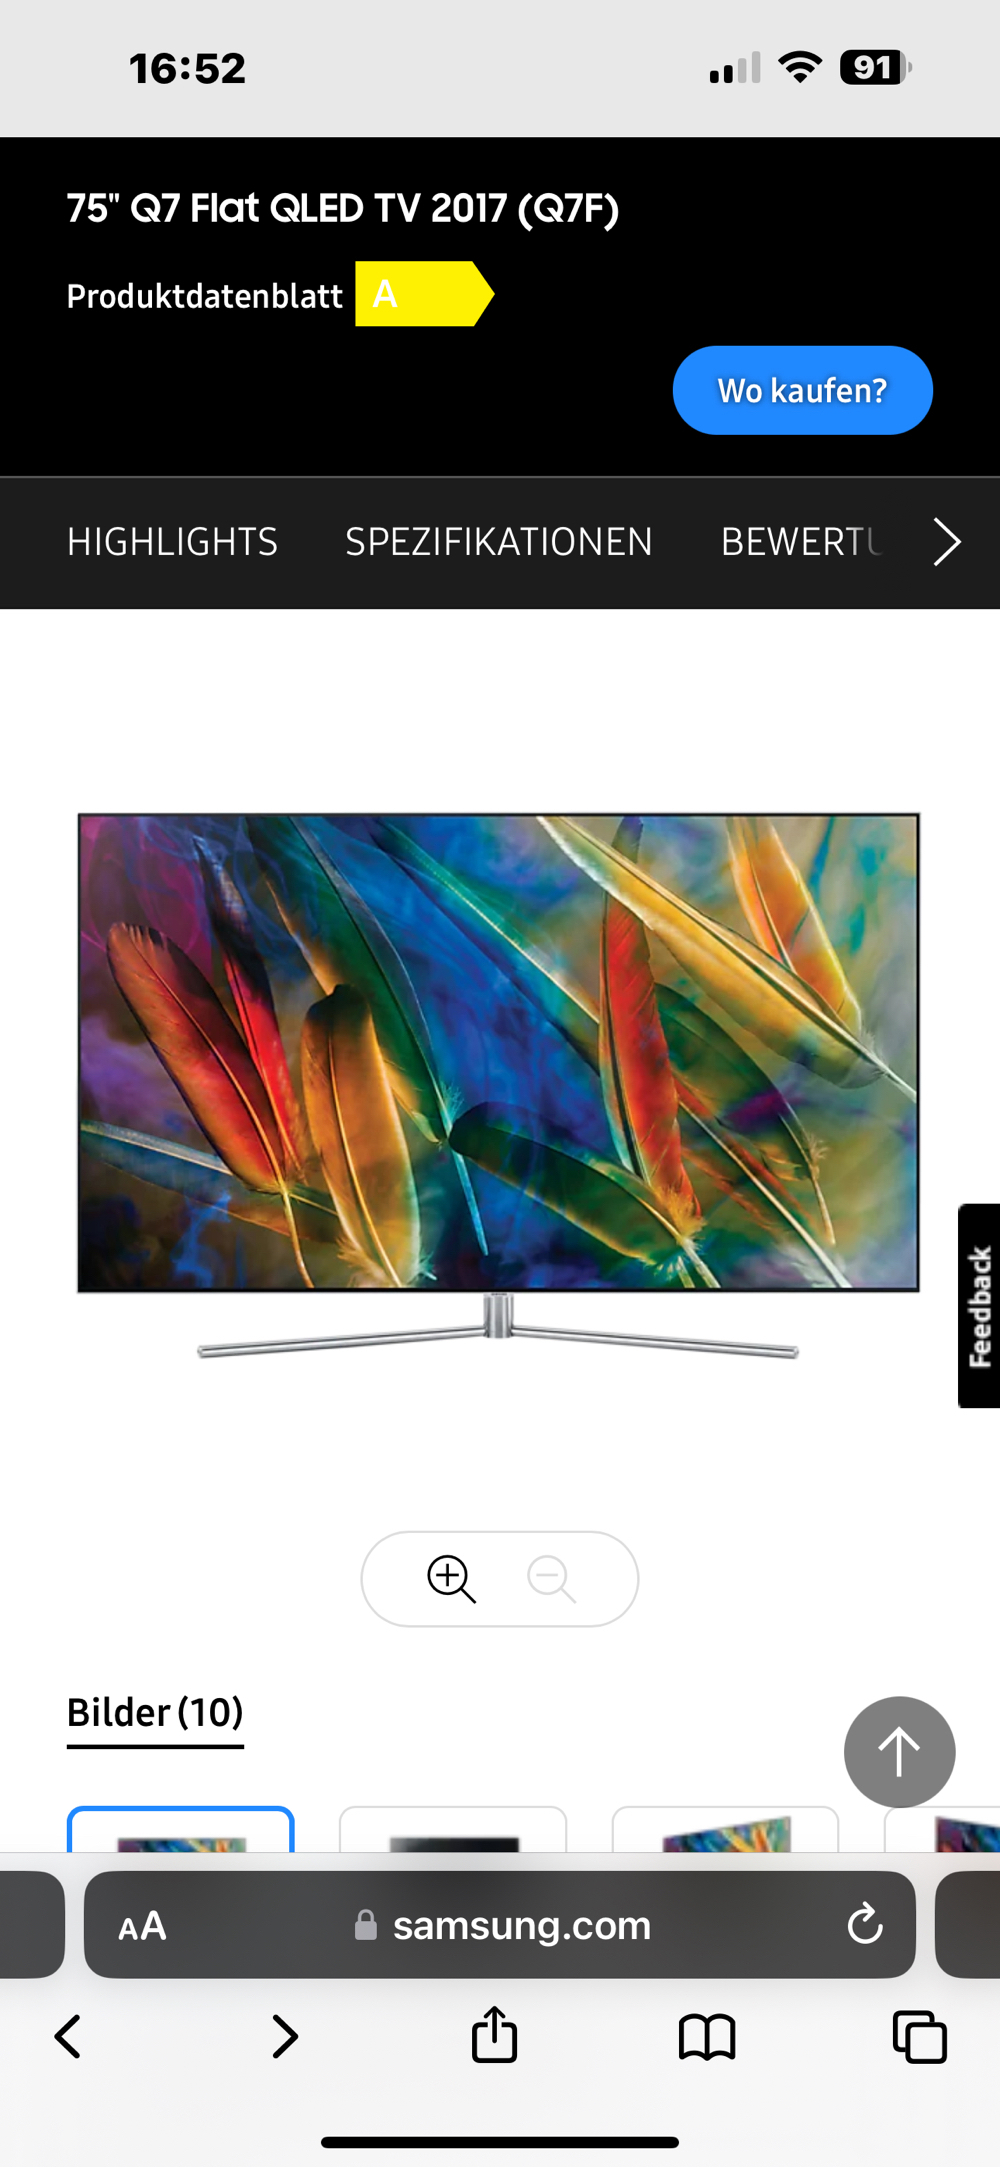 Samsung 75" Q7 Flat QLED TV (Q7F)